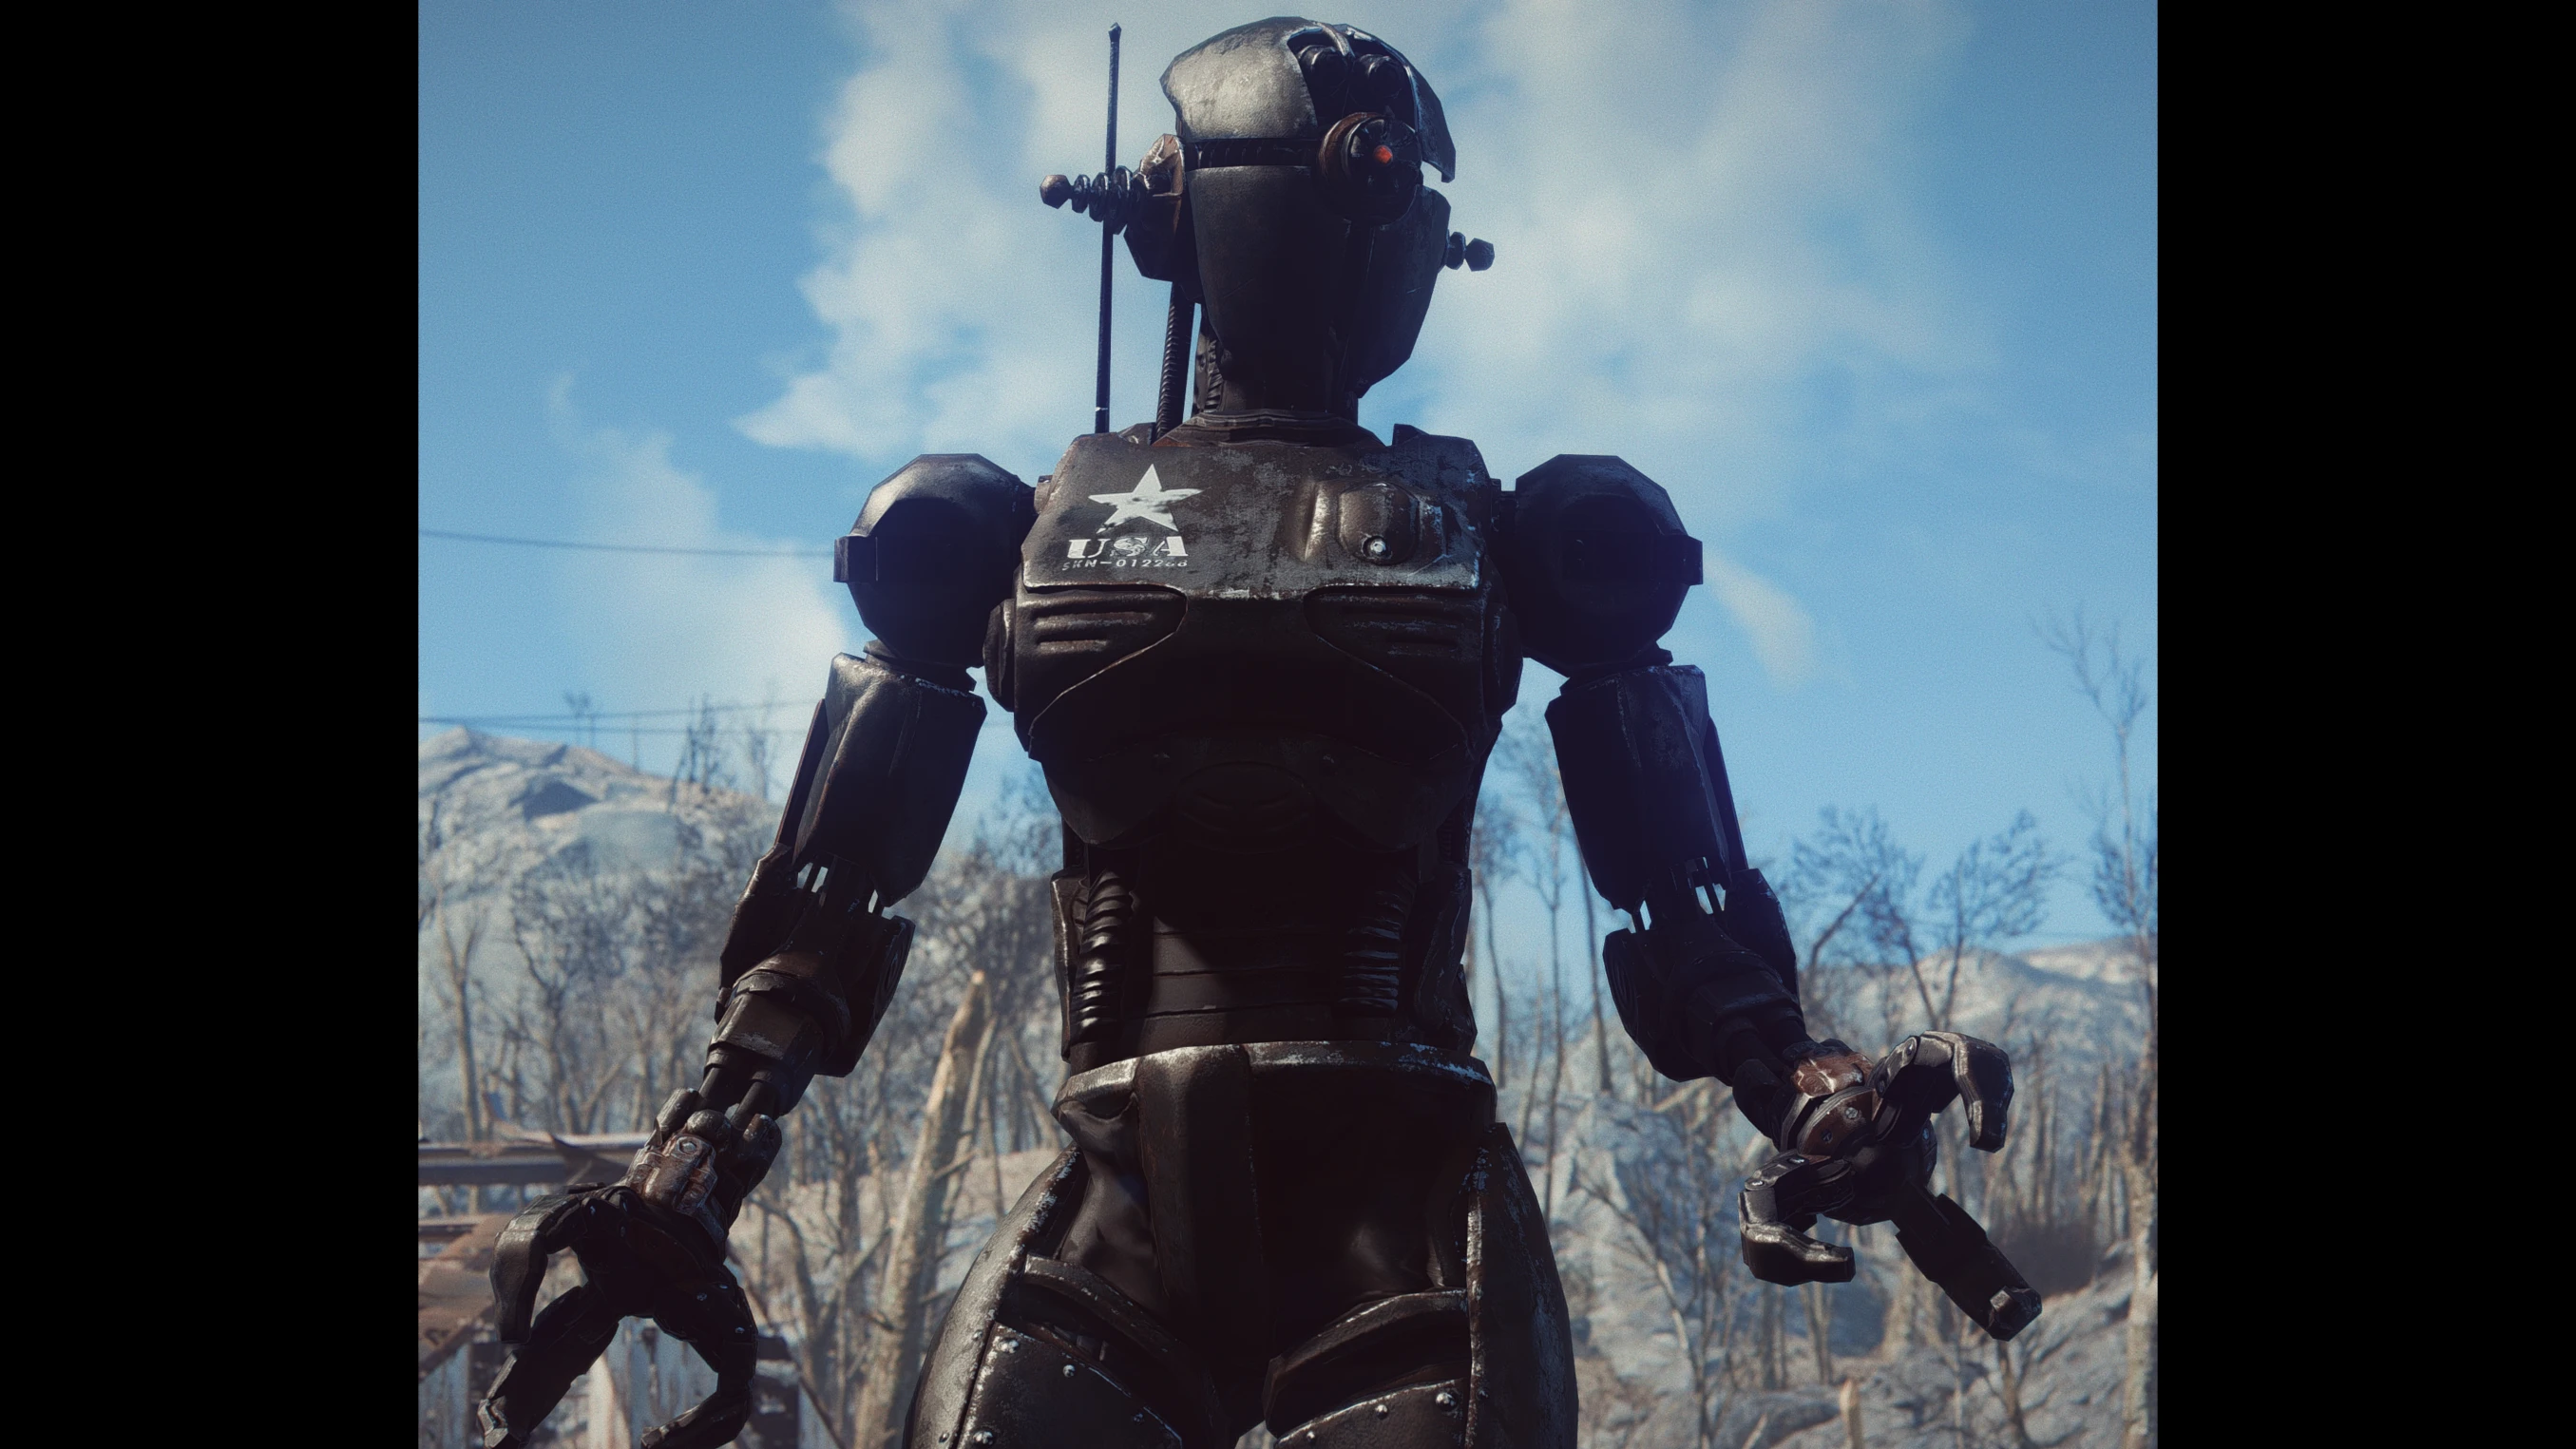 Assaultron Hd At Fallout 4 Nexus Mods And Community